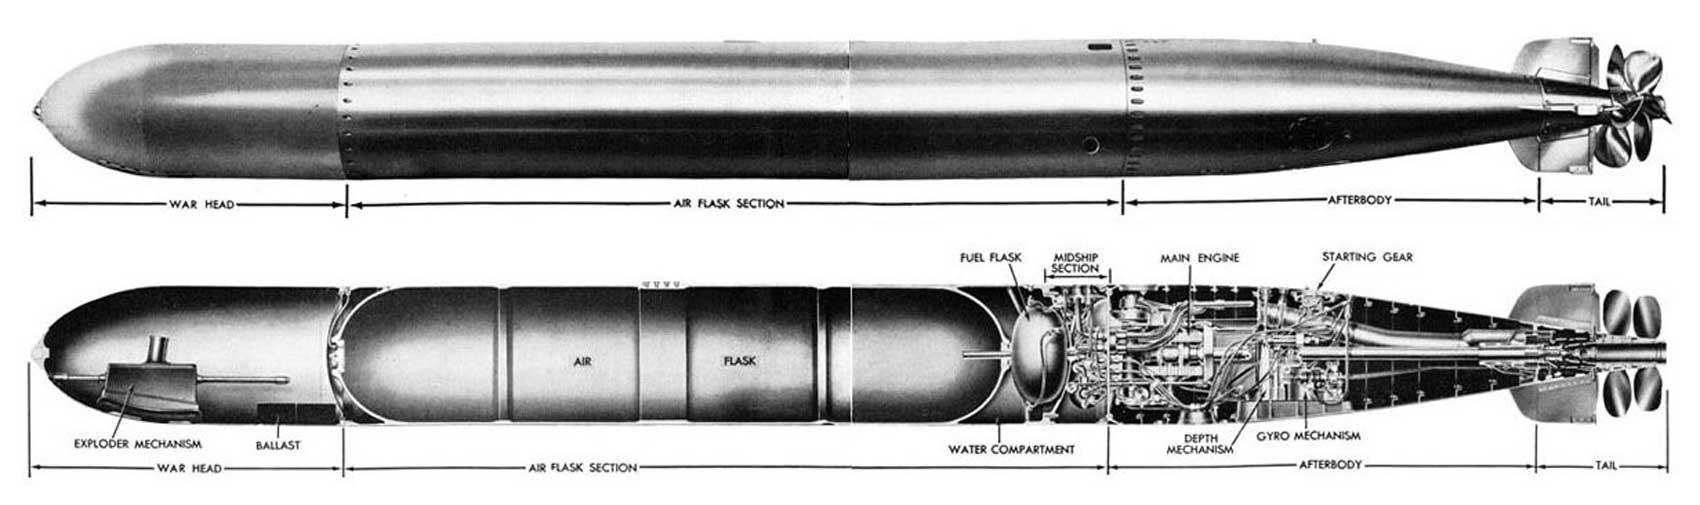 Торпеда длина. Торпеда калибра 533 мм. 533 Мм торпеда MK II. MK 14 Torpedo.